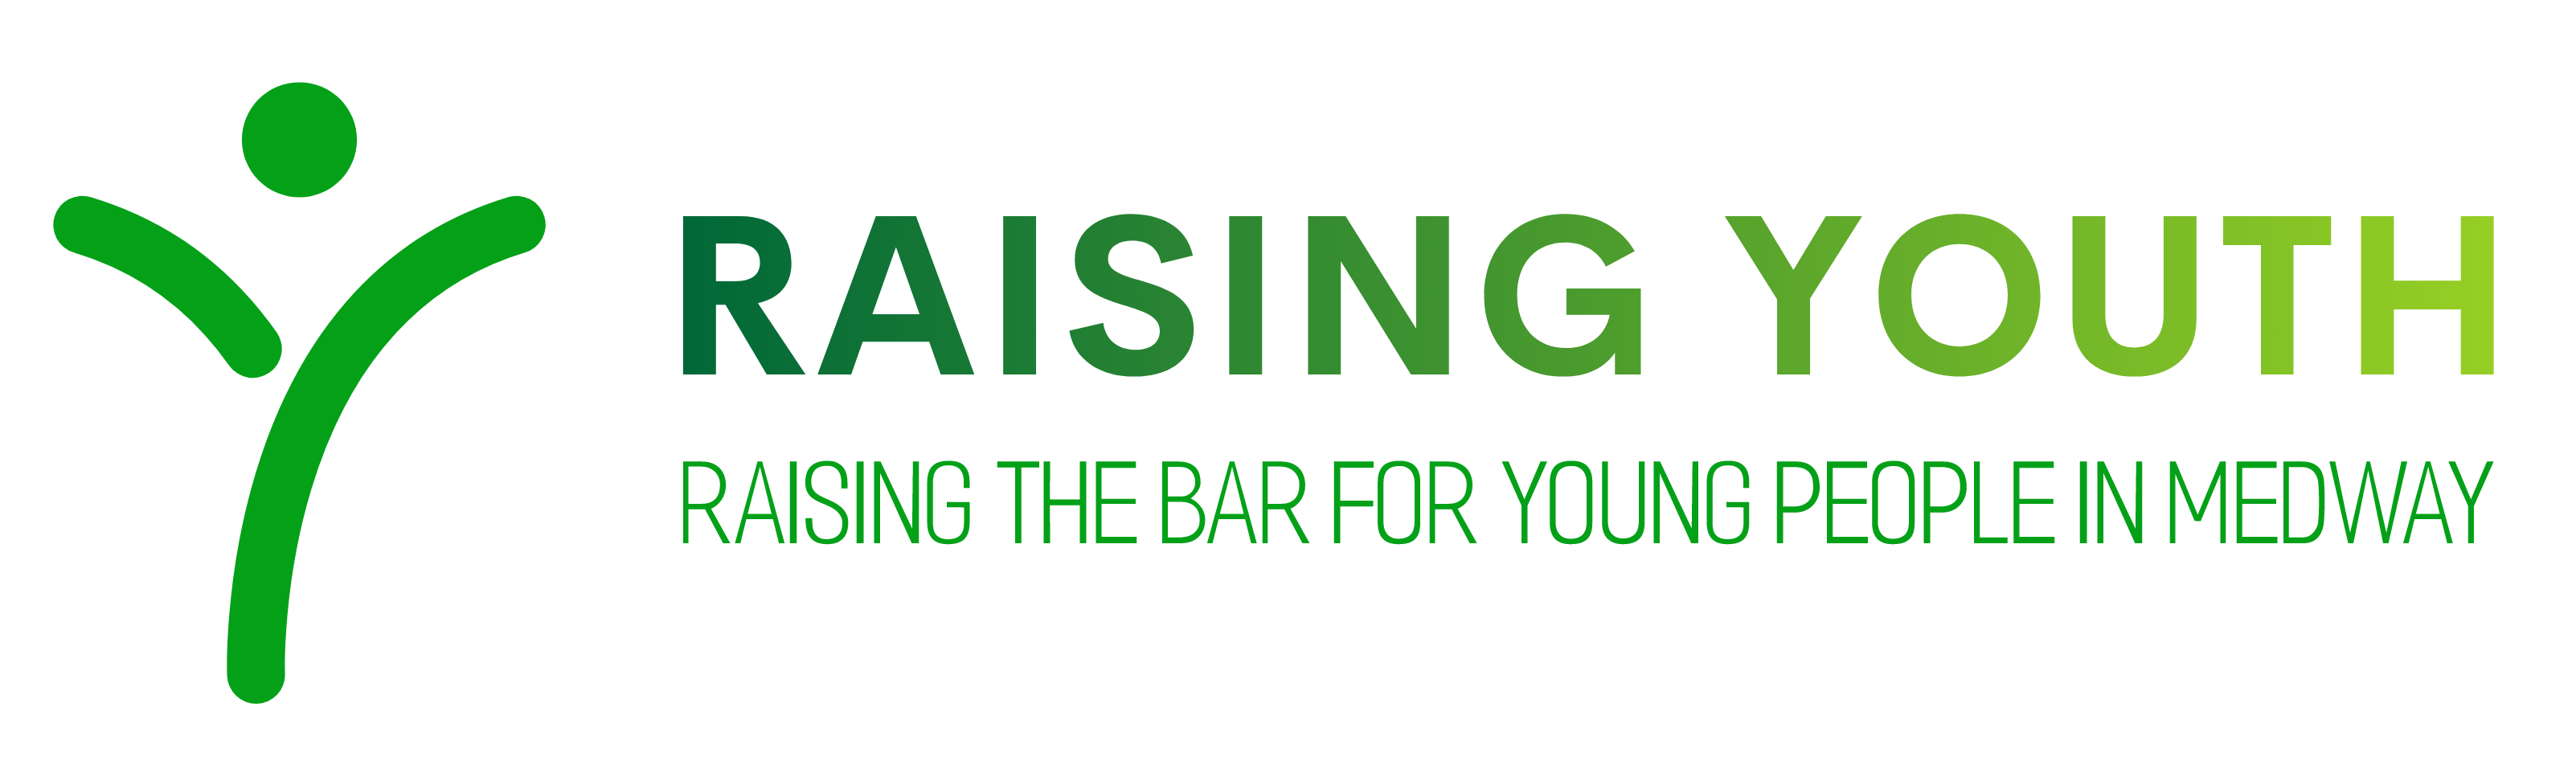 Raising Youth Cio logo